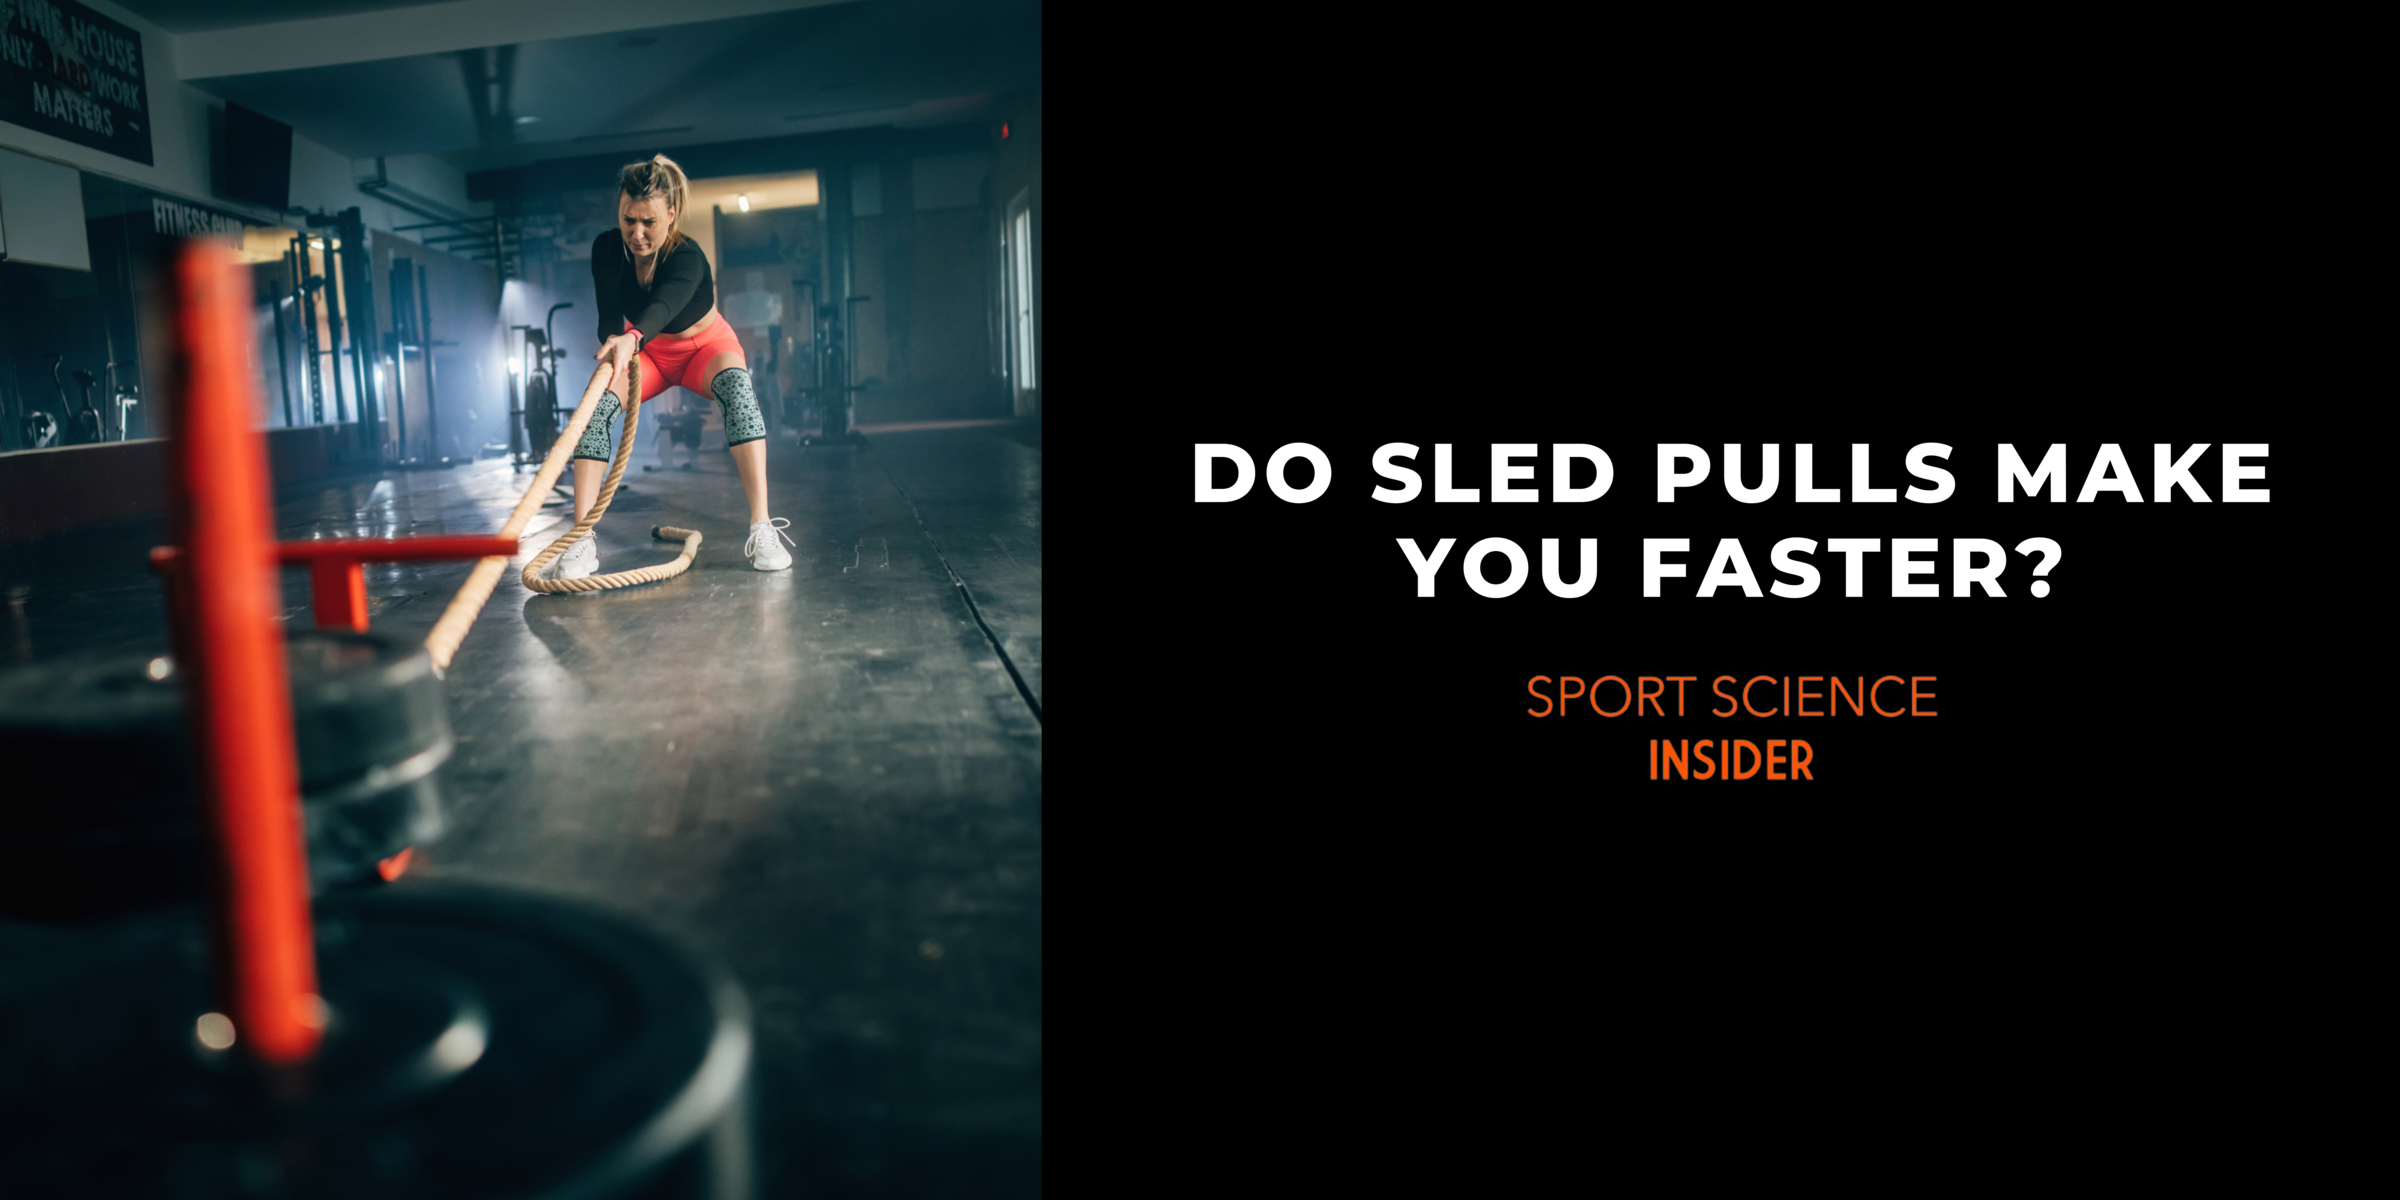 Do sled pulls make you faster?